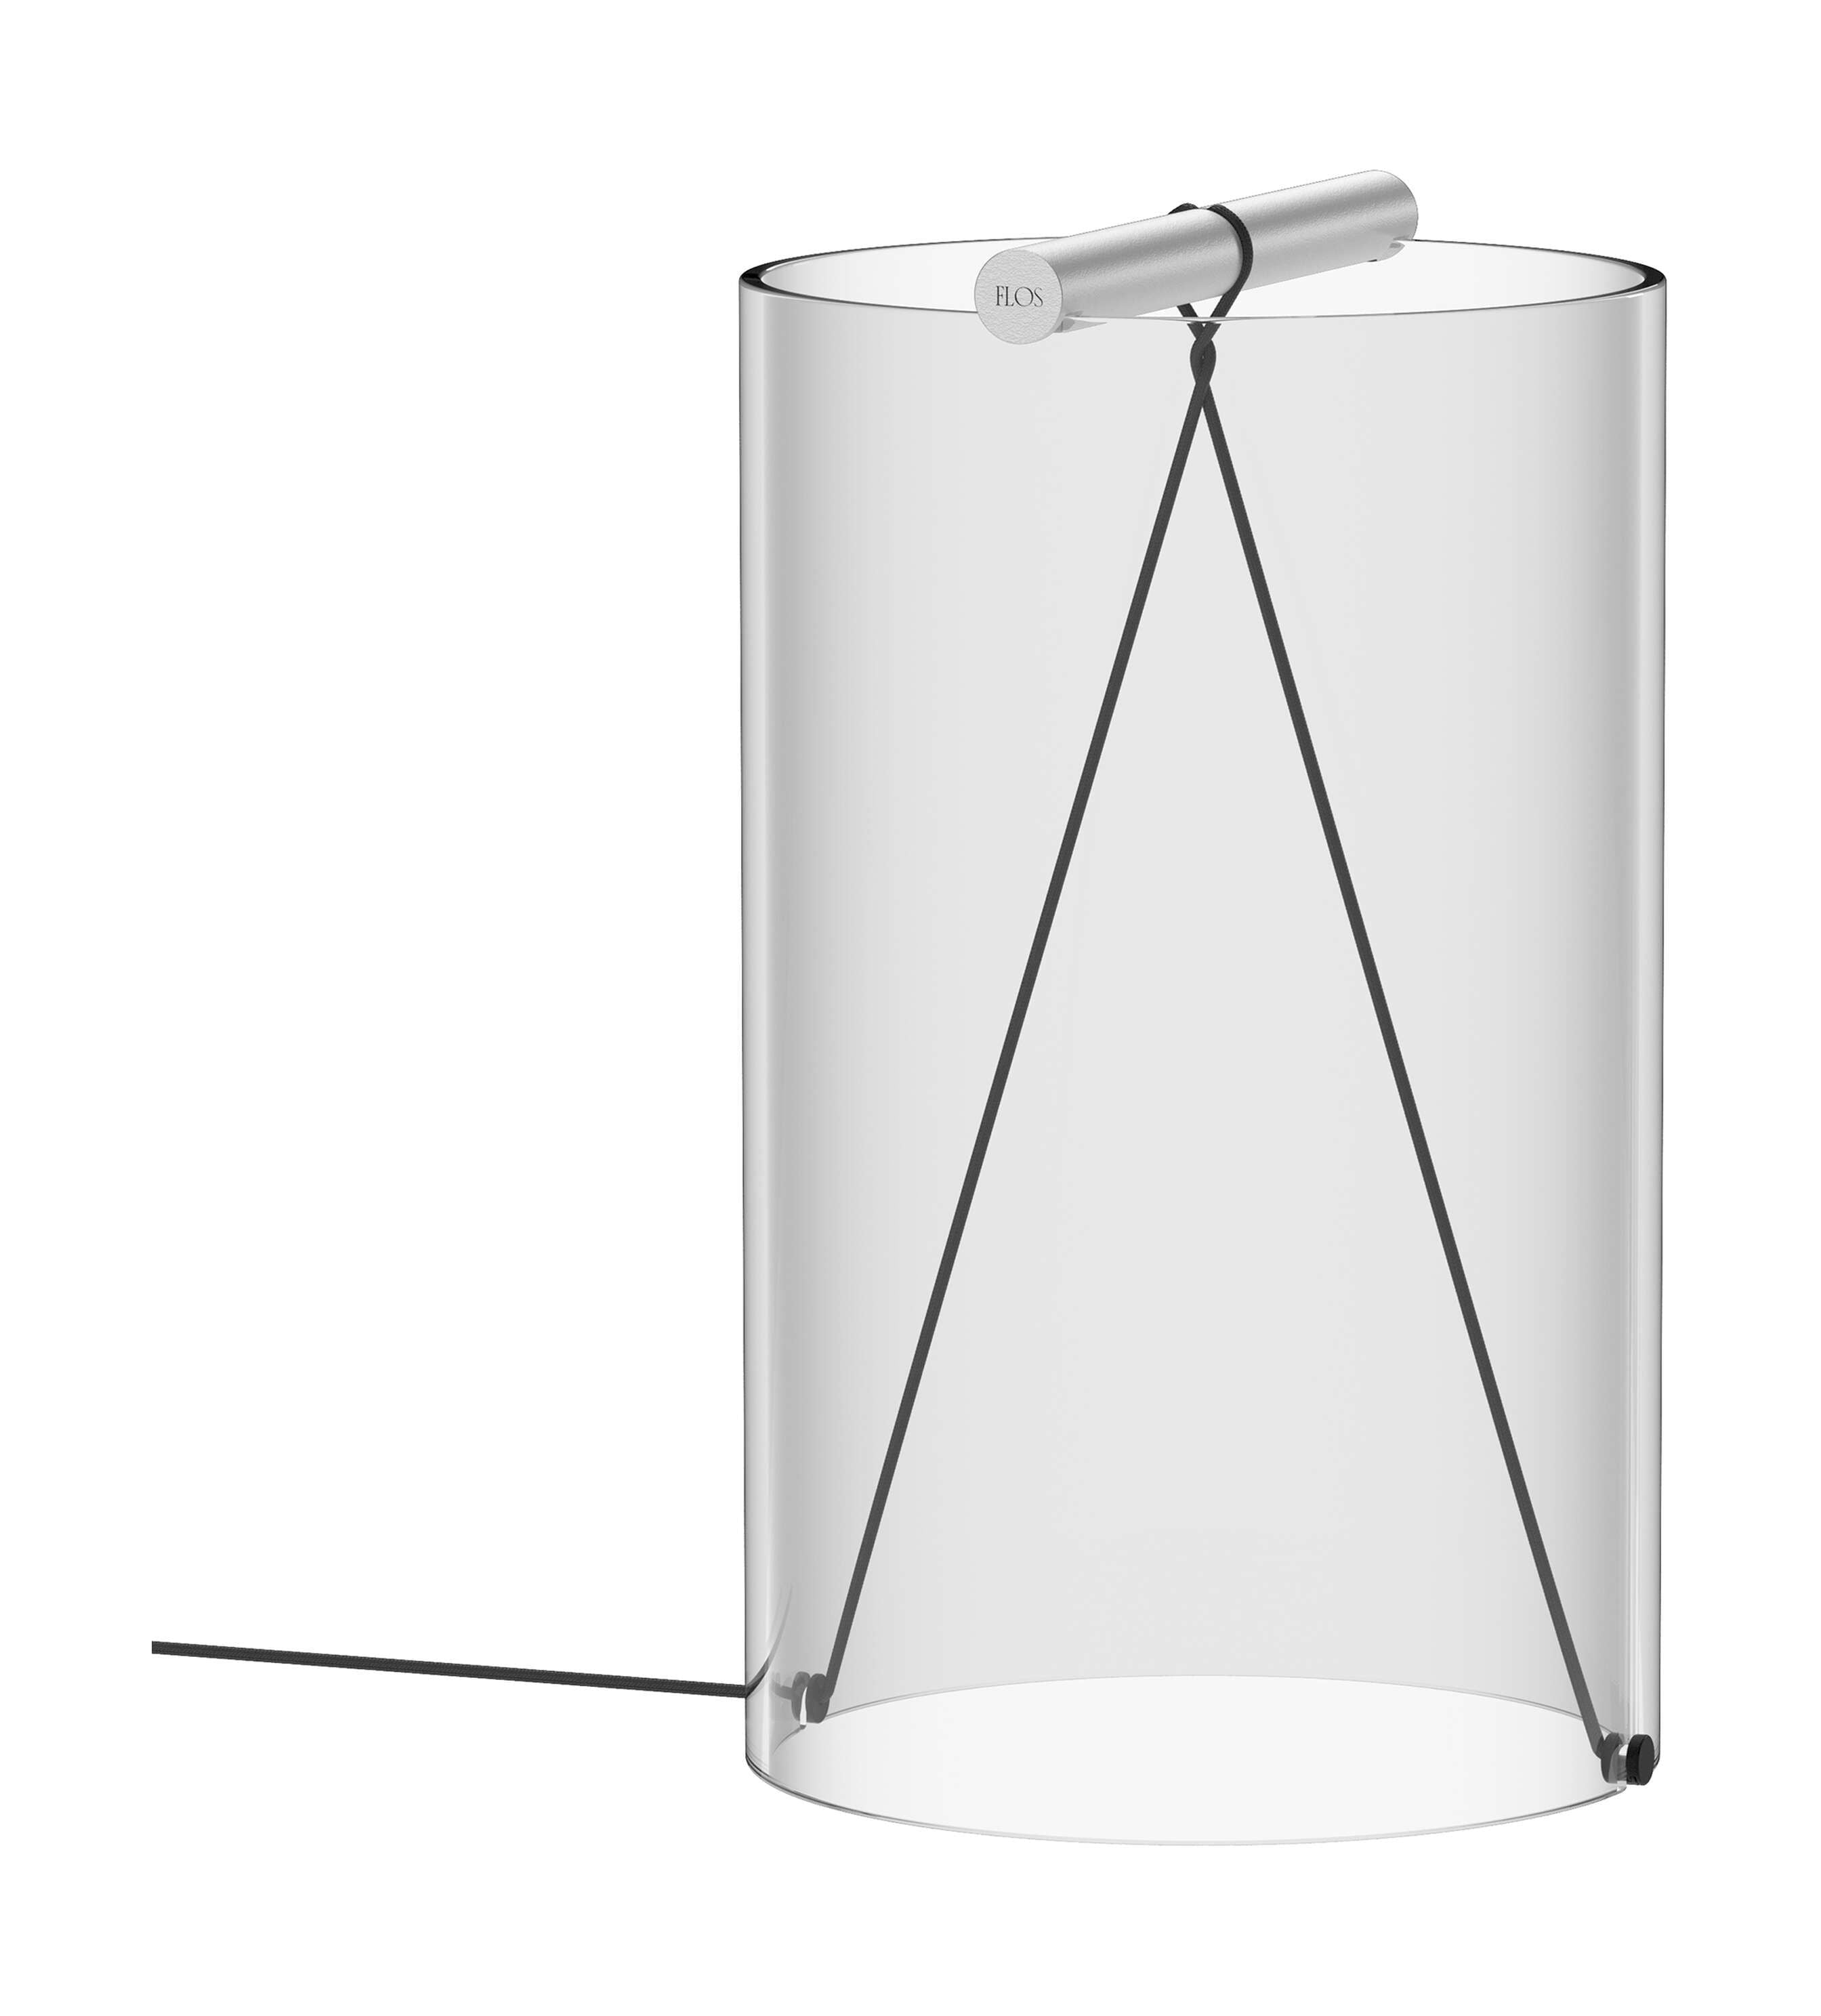 FLOS do lampy stołowej T2, aluminium